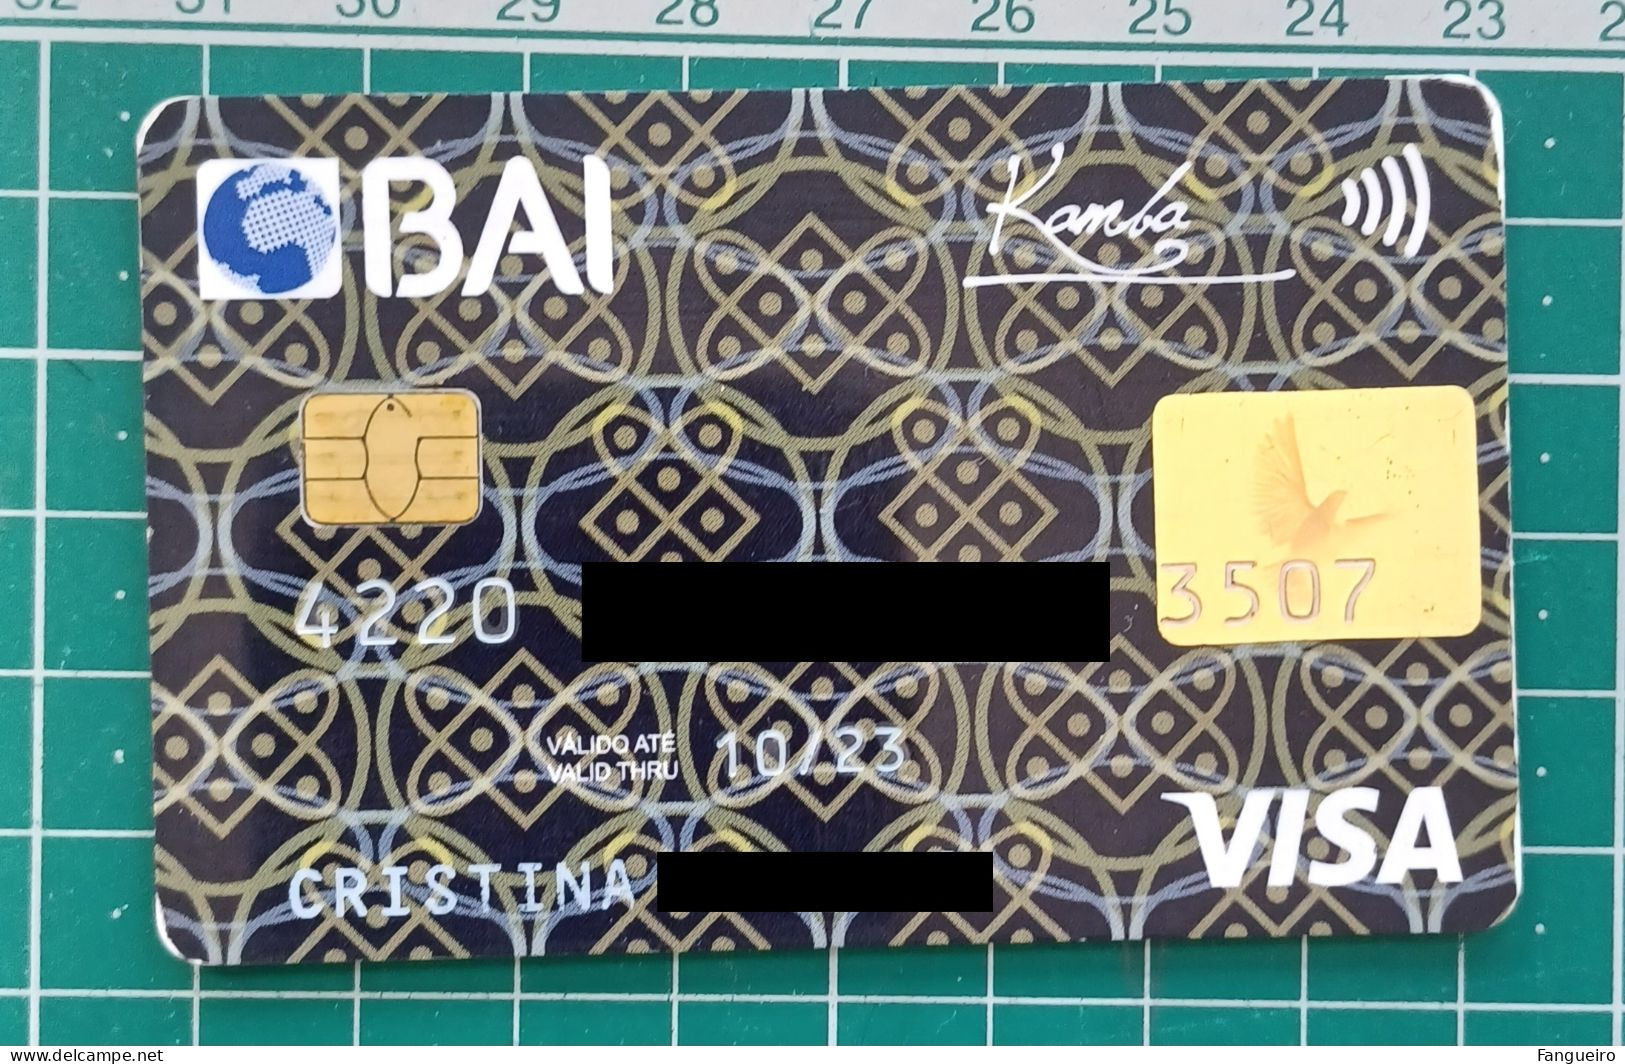 ANGOLA CREDIT CARD BAI - Cartes De Crédit (expiration Min. 10 Ans)